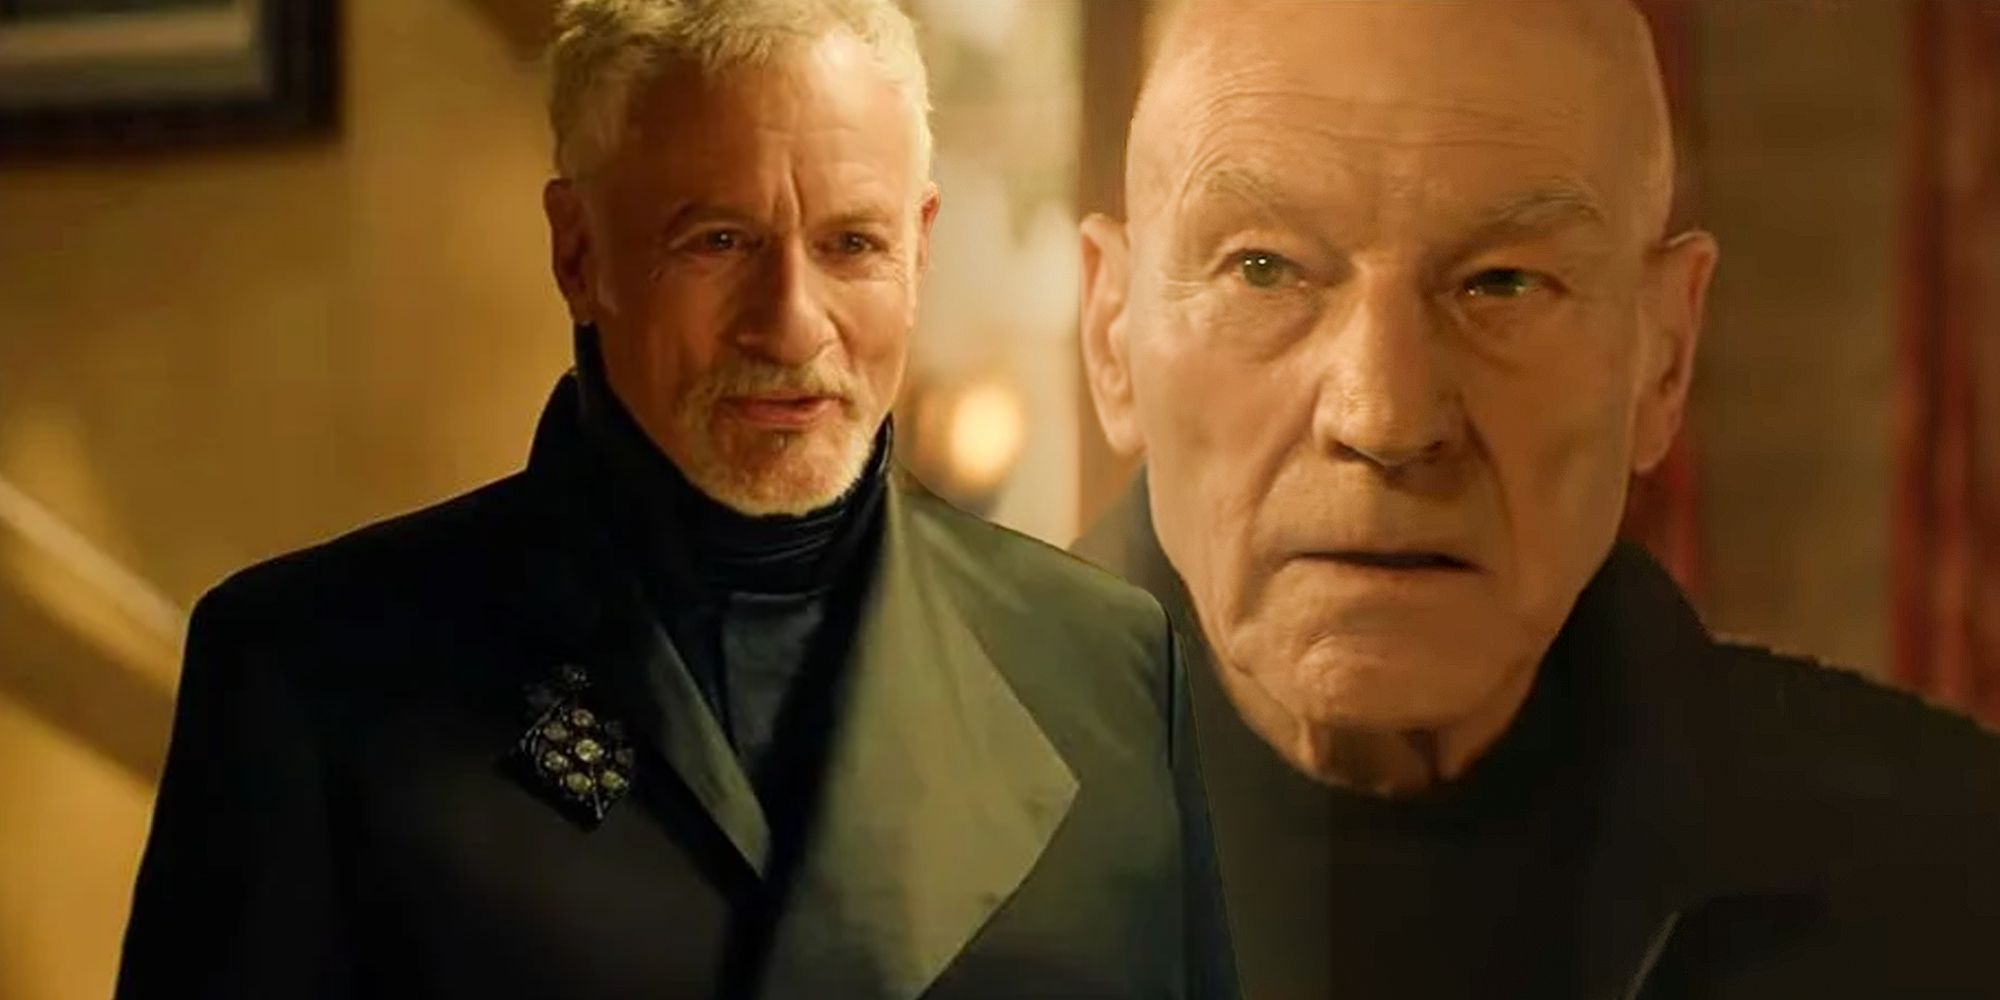 John de Lancie as Q and Patrick Stewart as Picard in Star Trek Picard Season 2